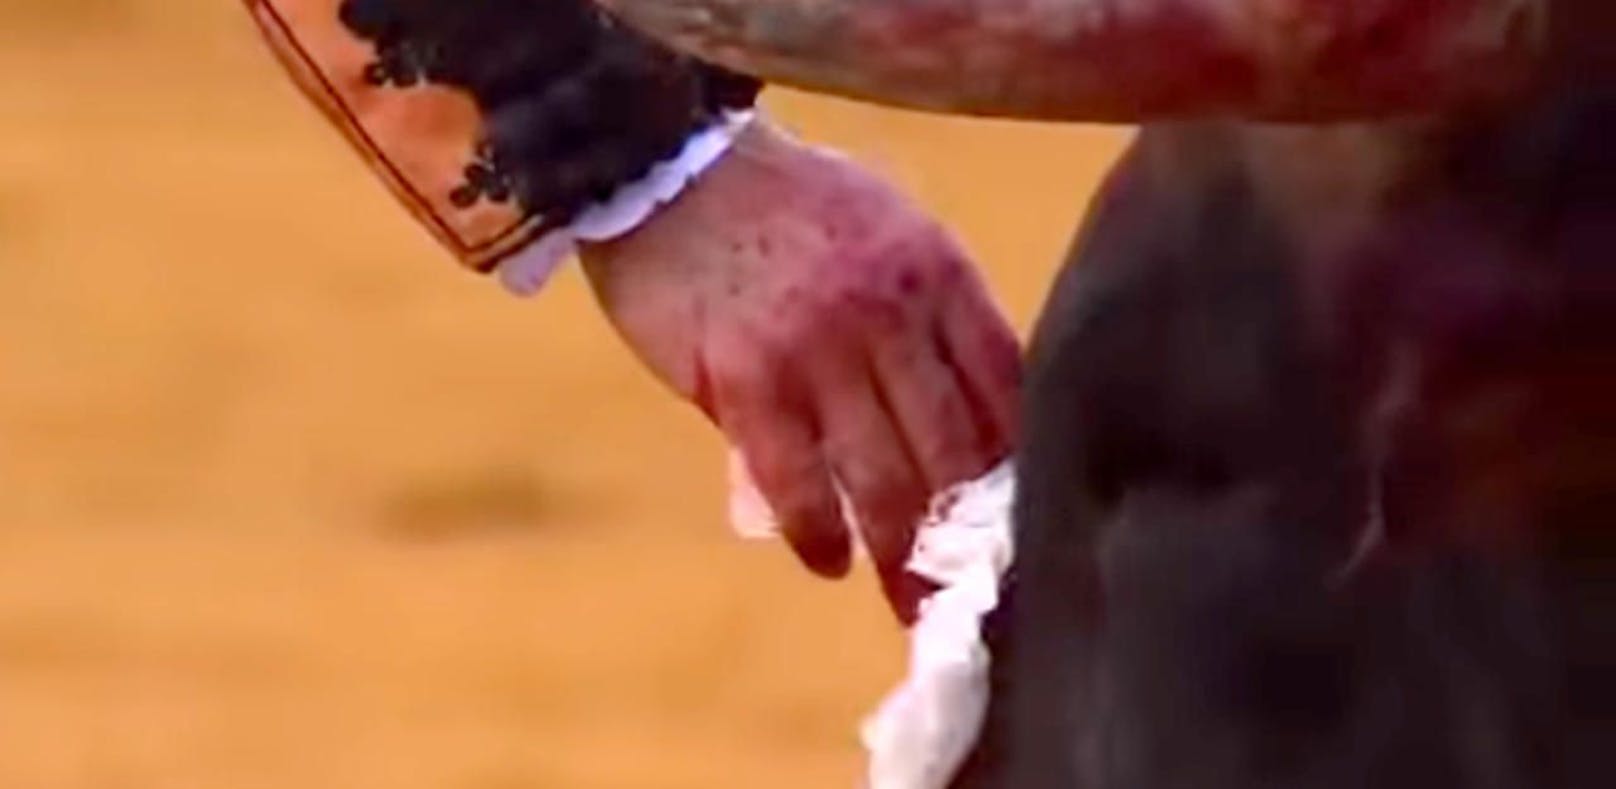 Matador trocknet leidendem Stier die Tränen